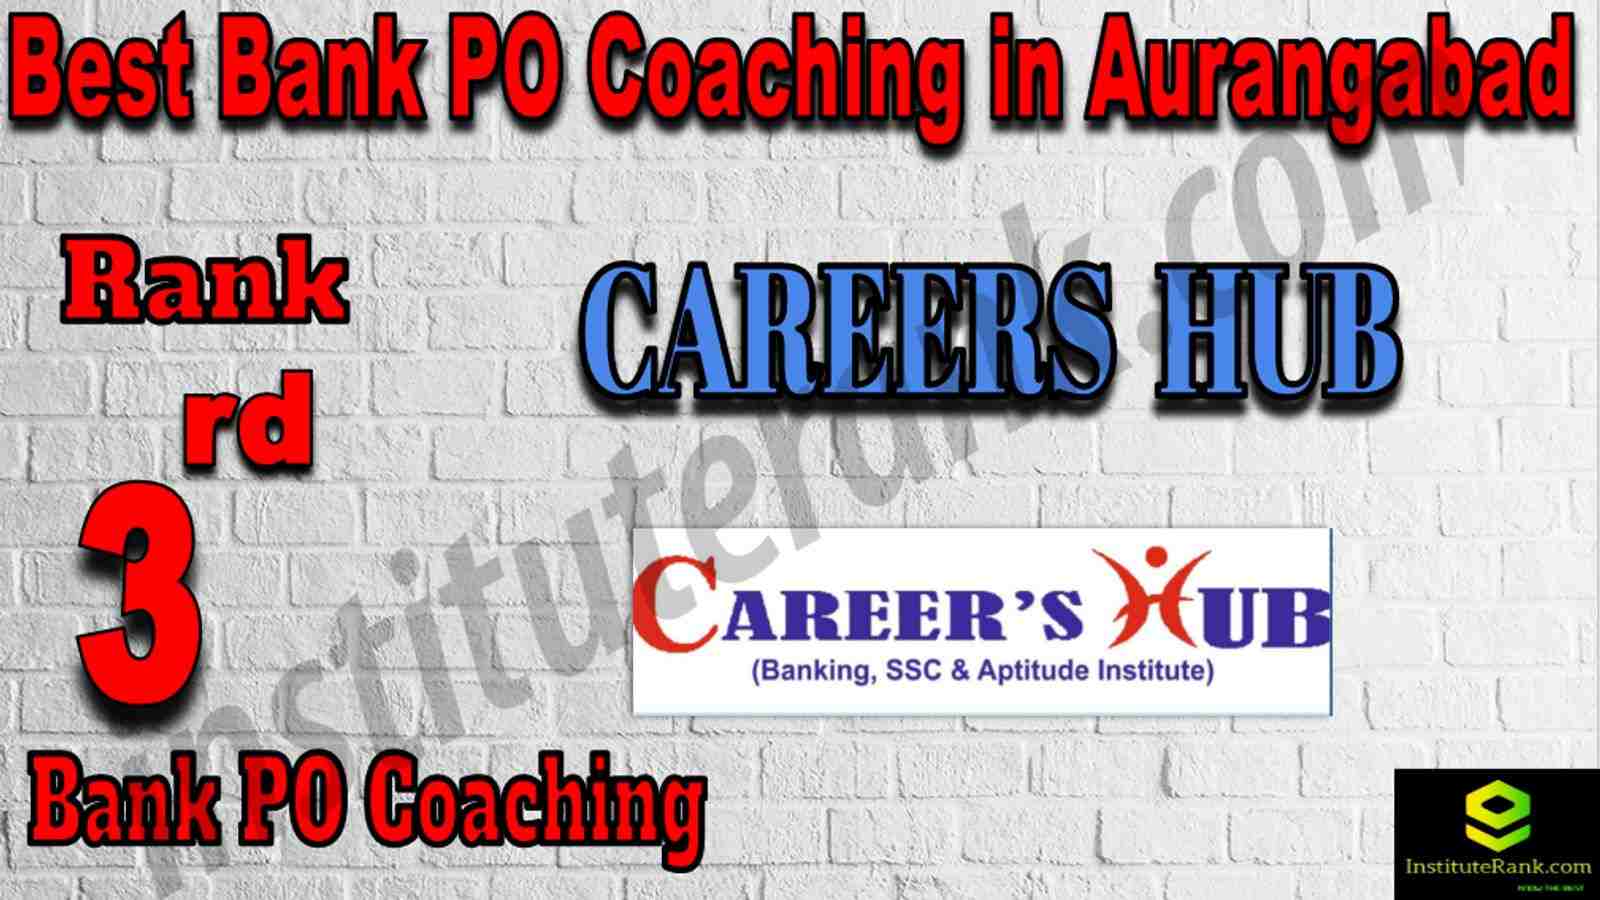 3rd Best Bank PO Coaching in Aurangabad